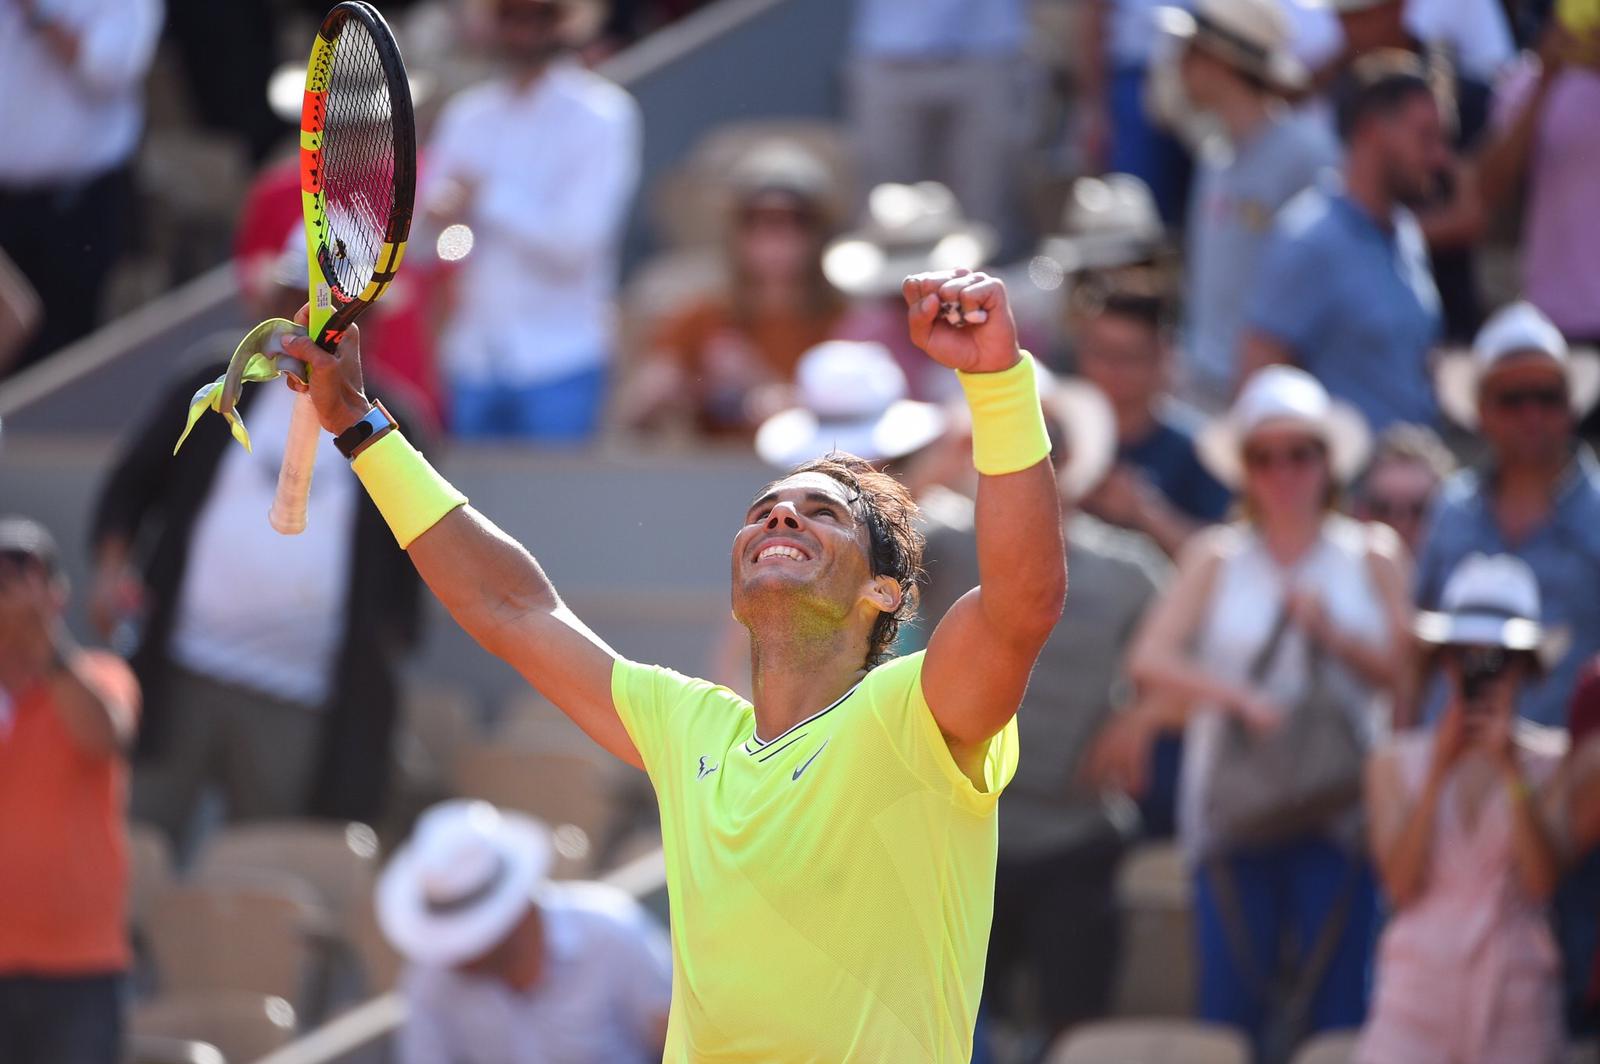 FACTBOX-Tennis-U.S. Open champion Rafa Nadal